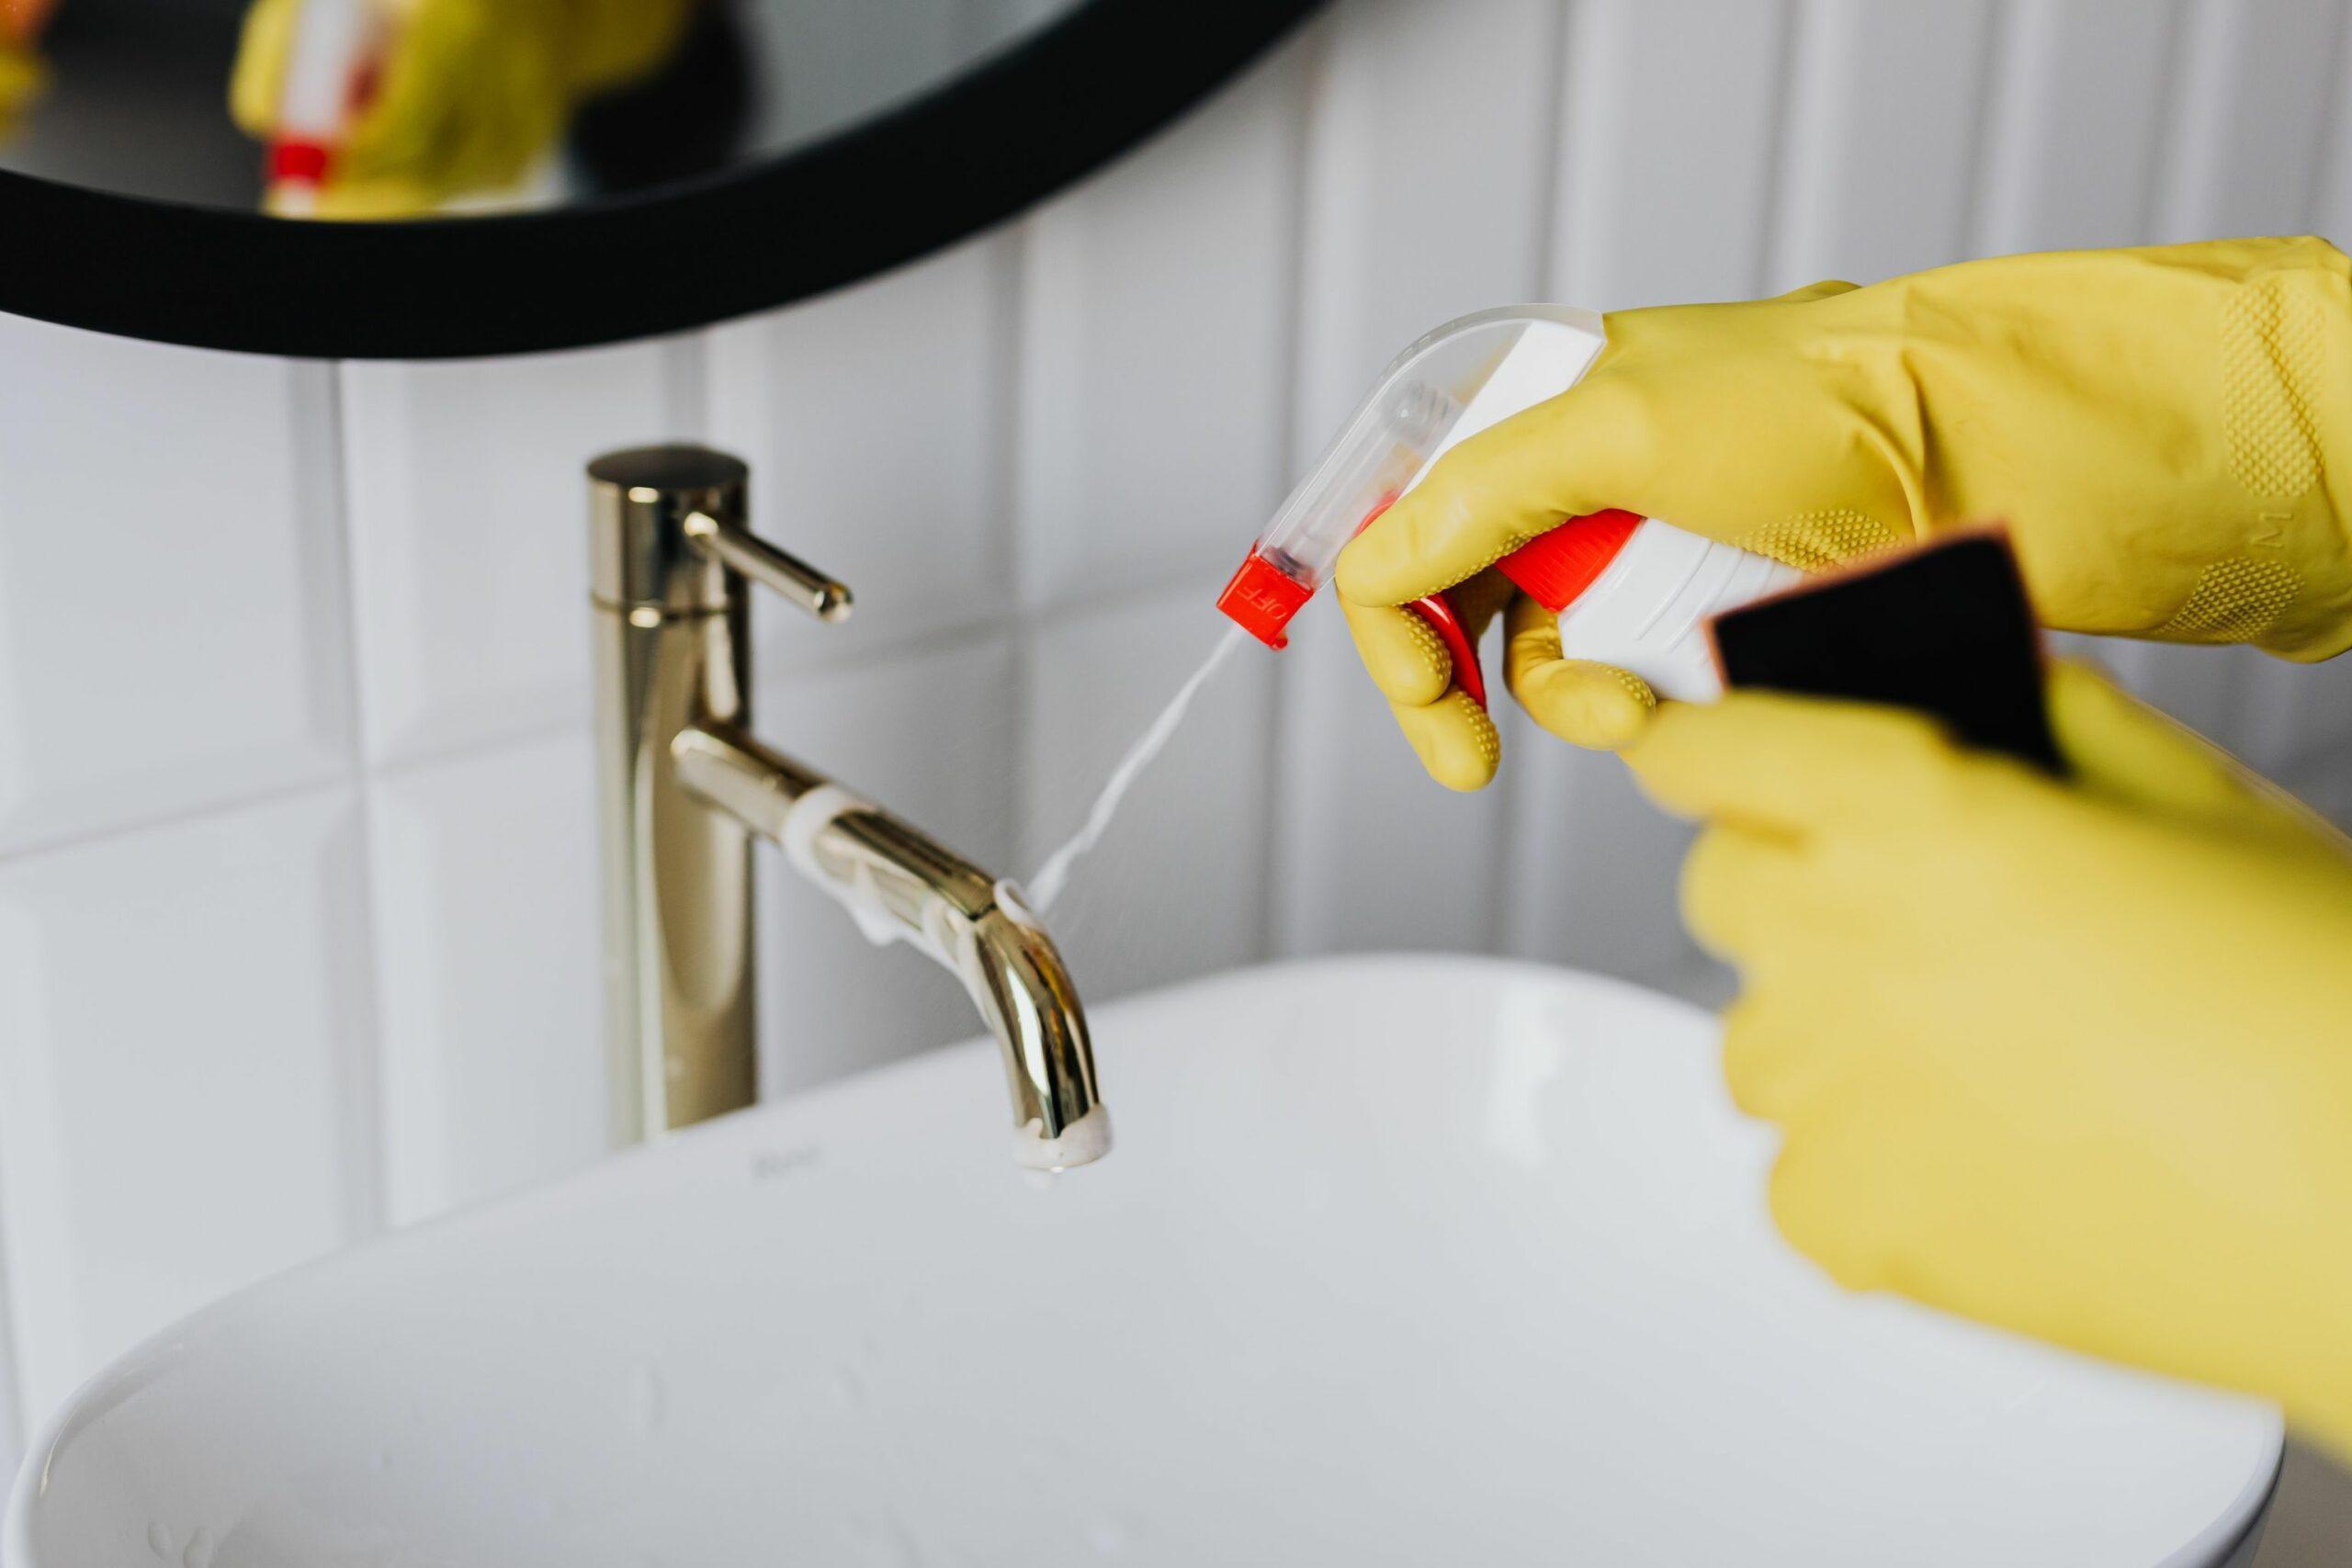 Faceless cleaner in gloves tiding up bathroom